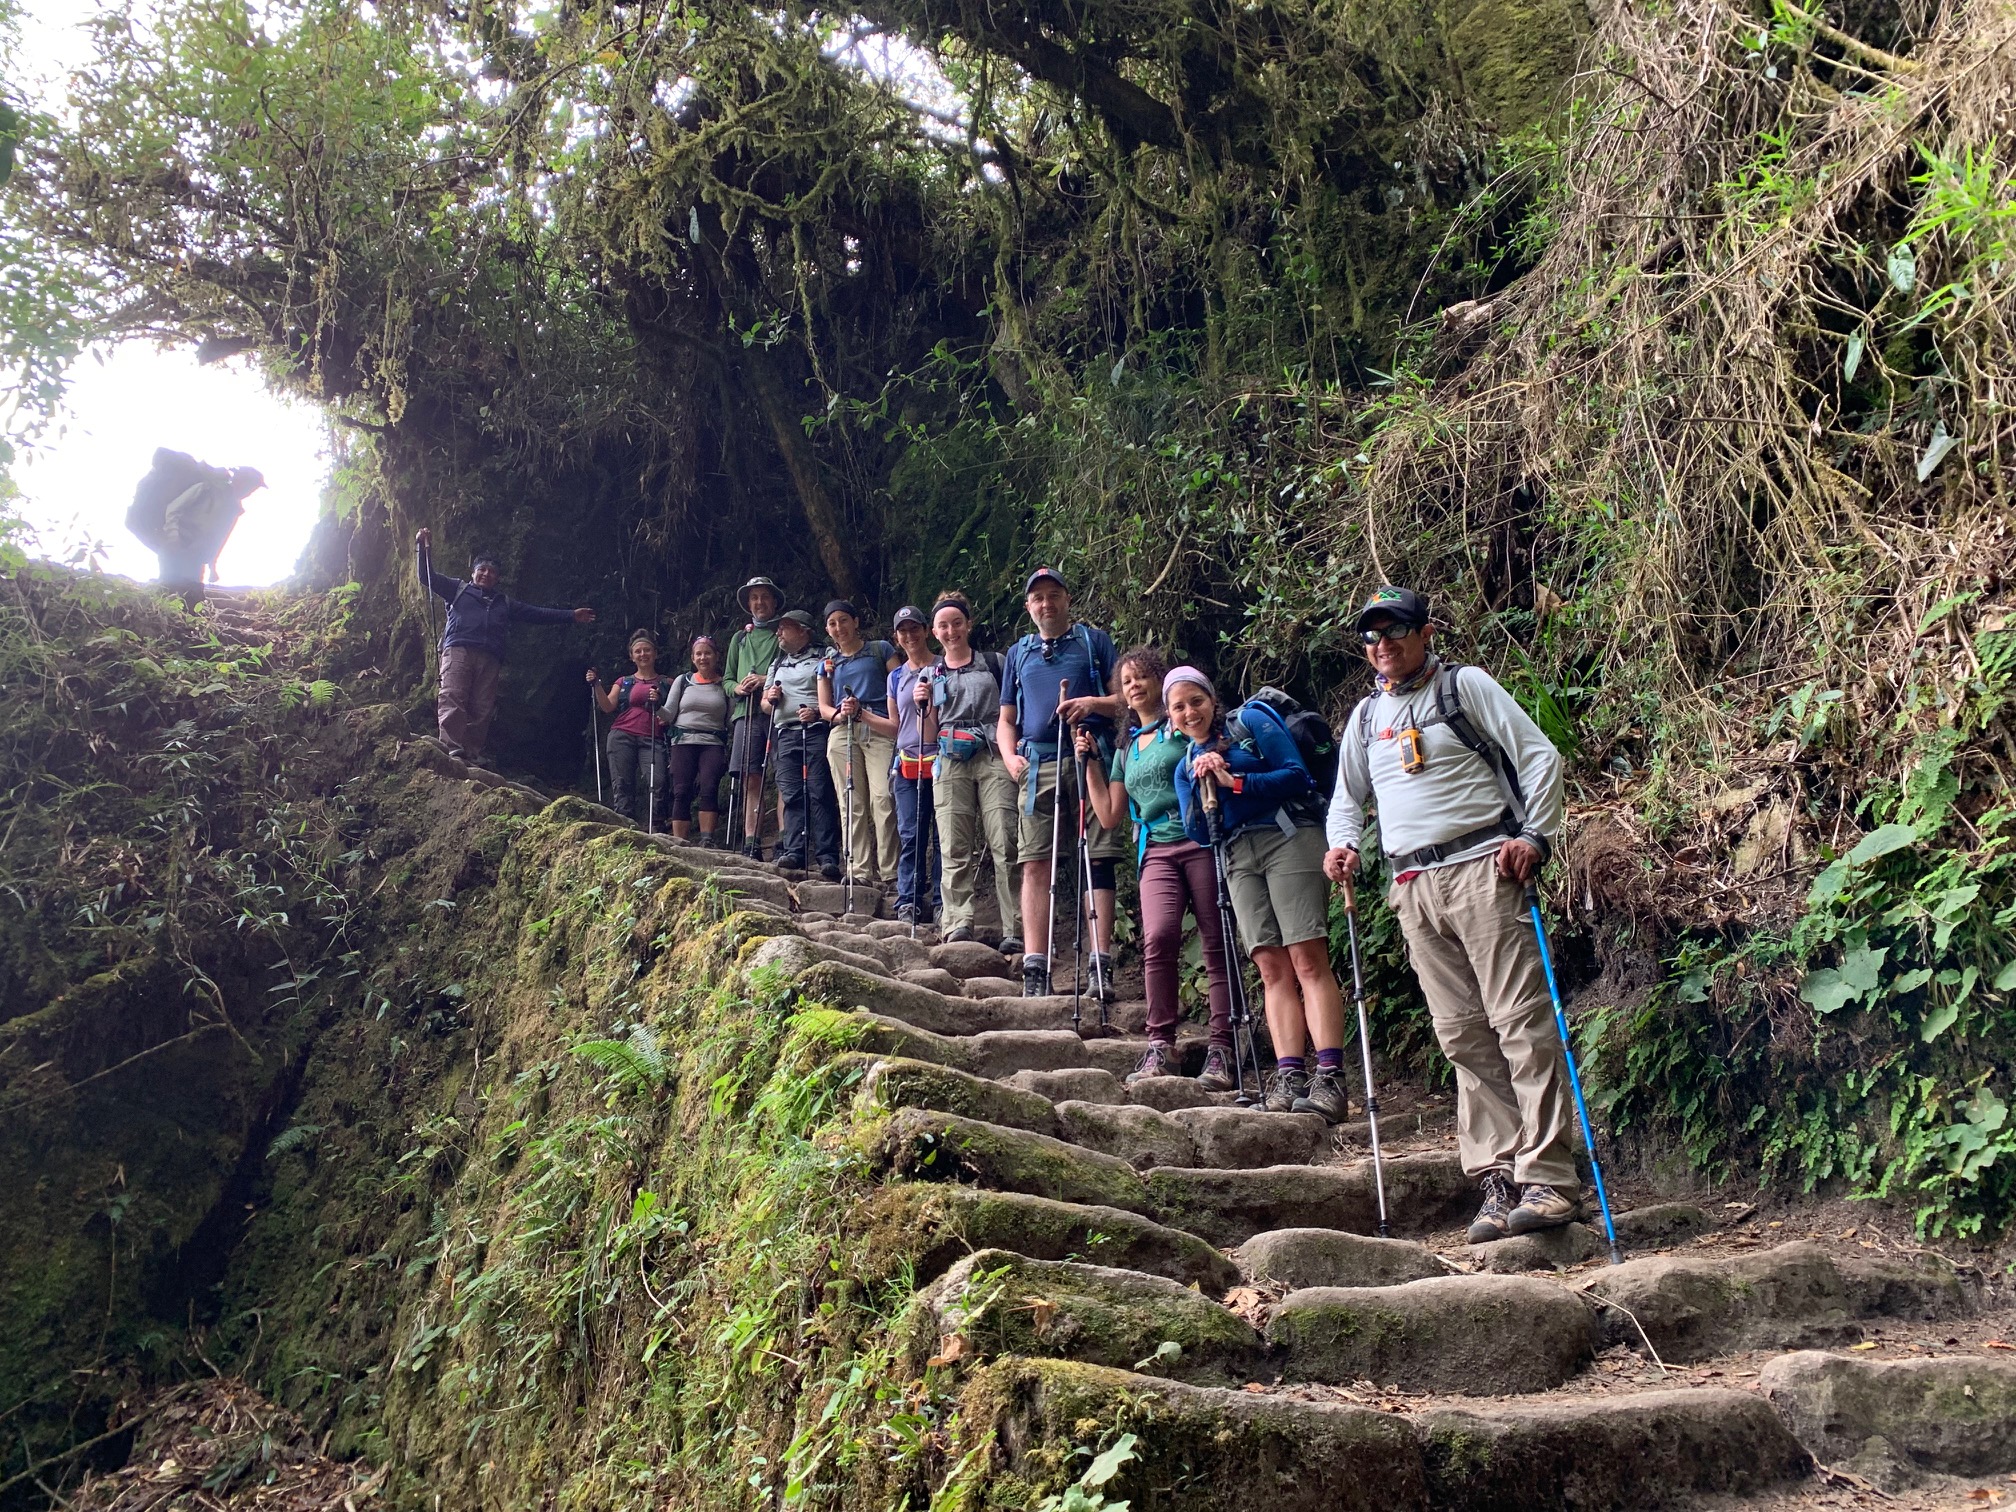 Descending on the Inca Trail